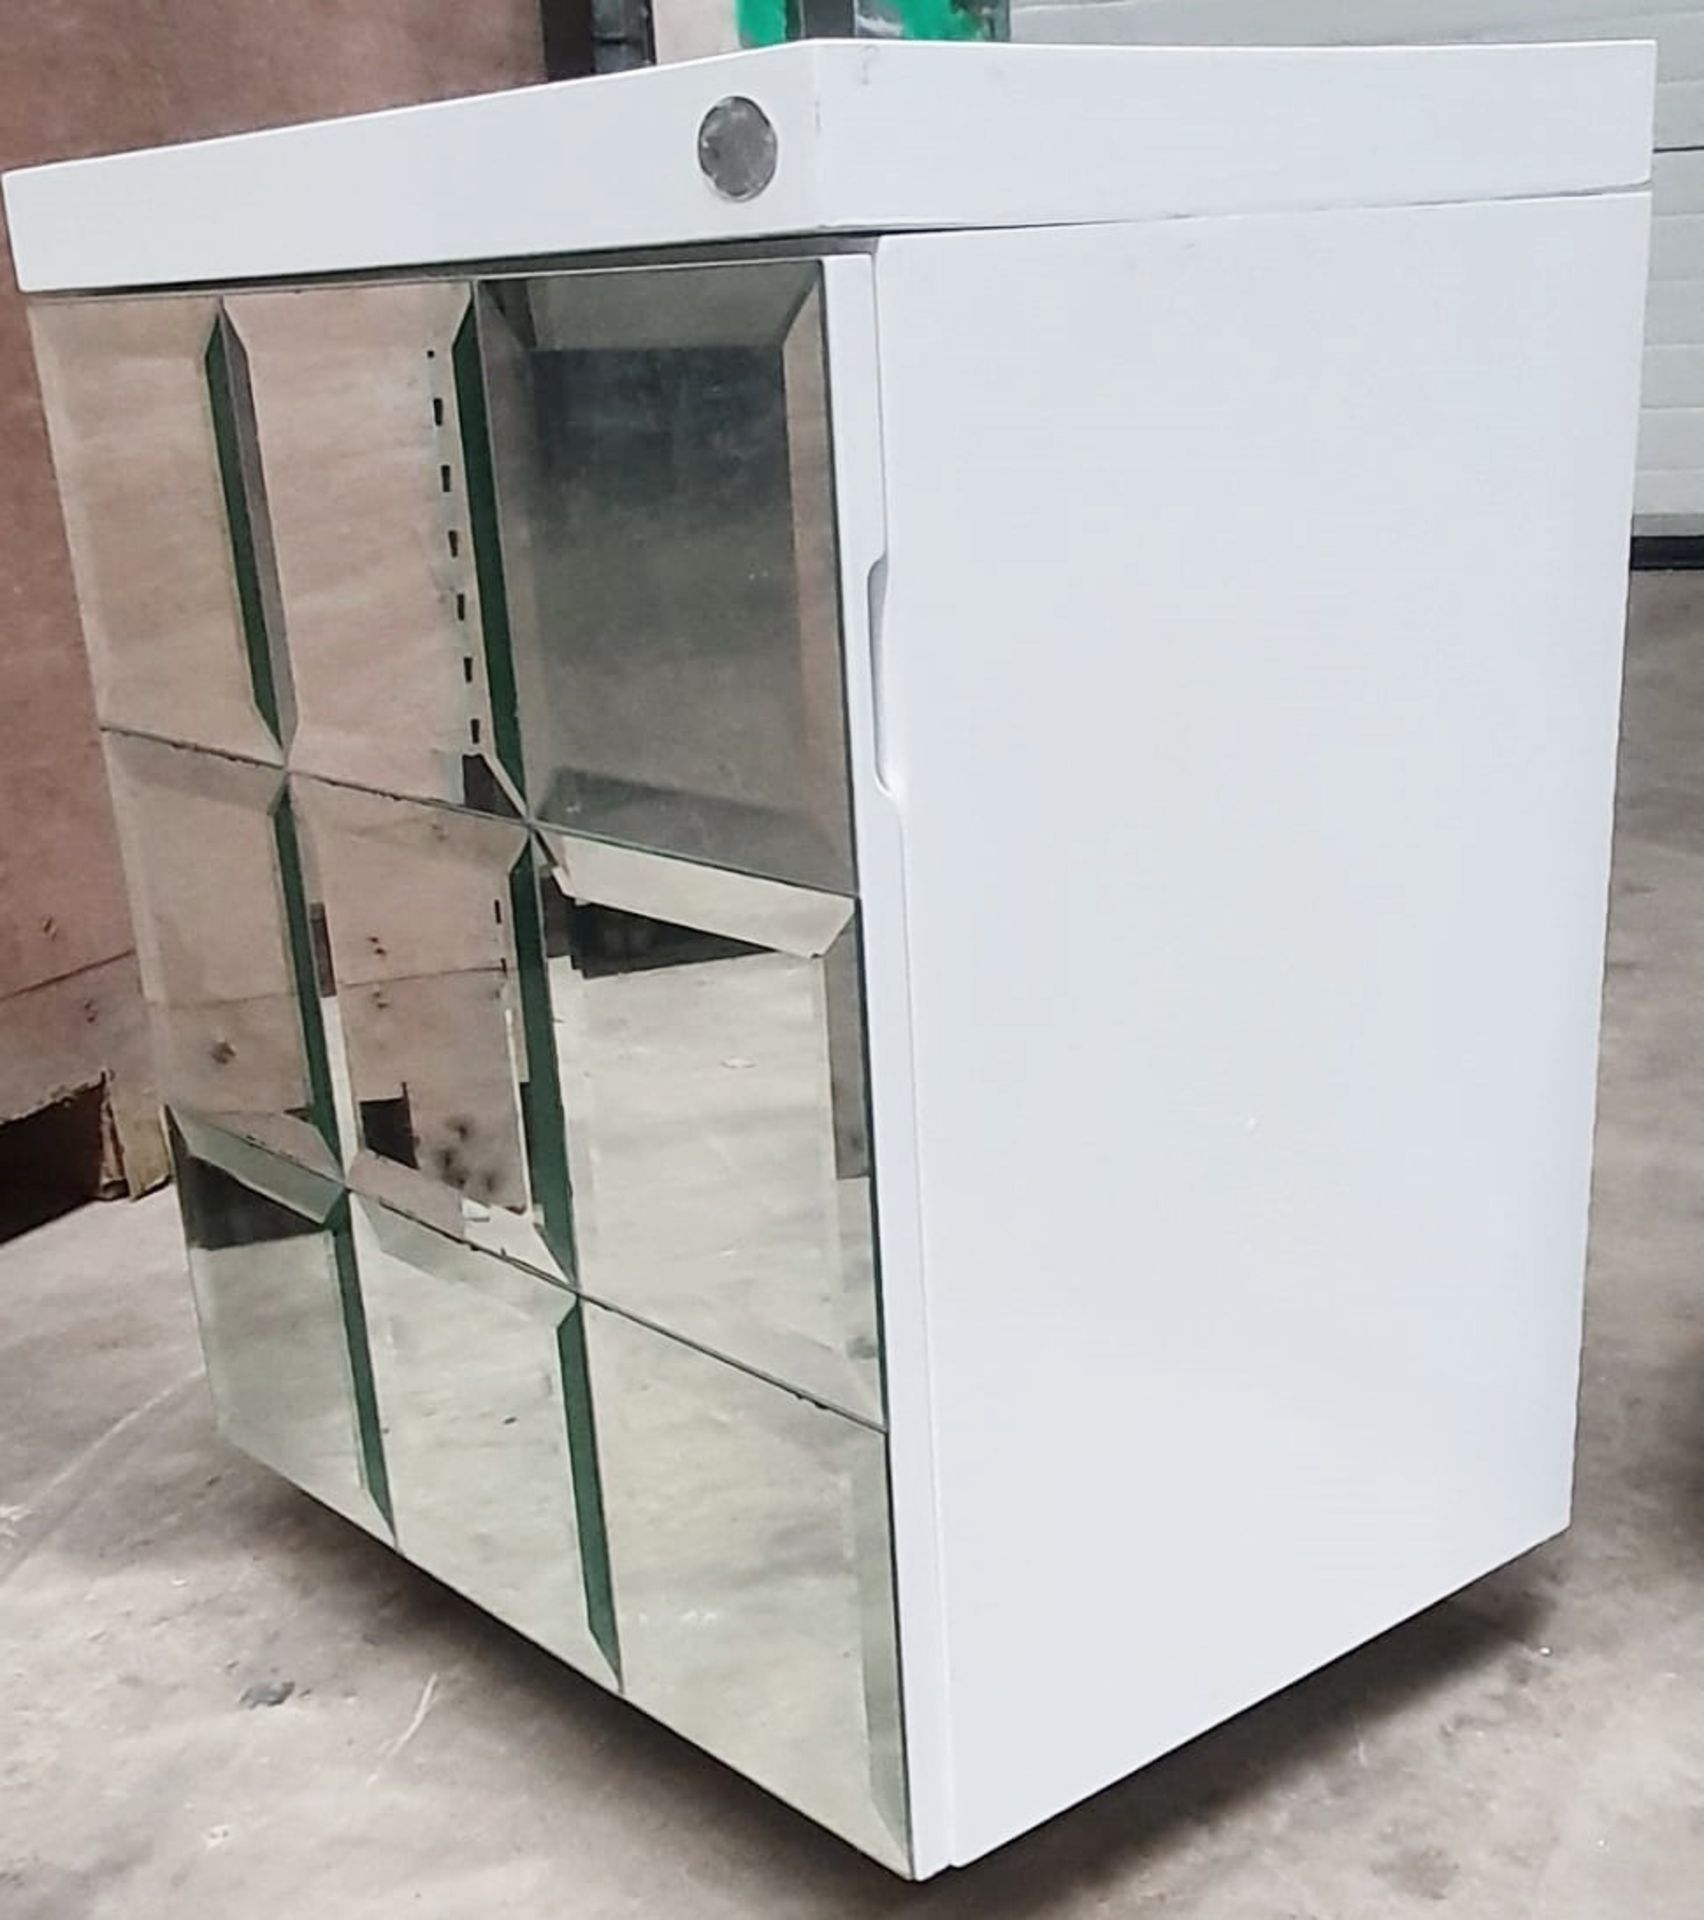 1 x GODI High-end Freestanding Mirrored 1-Door Bathroom Unit, In White - Unused Boxed Stock - Image 5 of 6